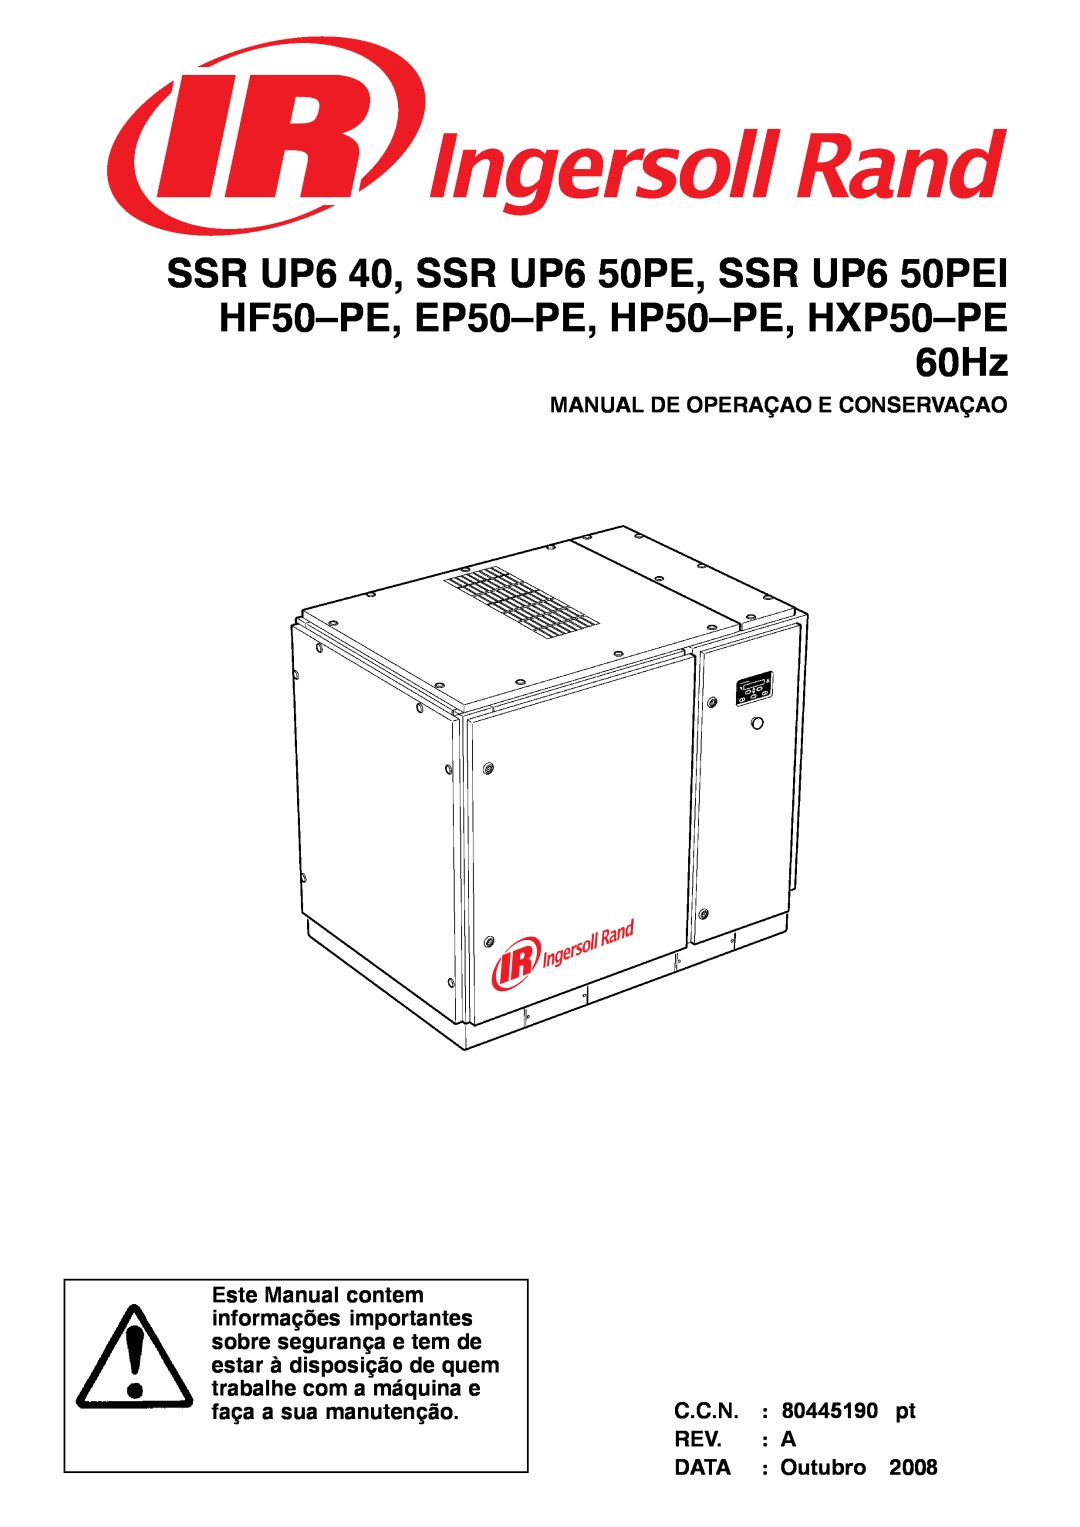 Ingersoll-Rand HP50-PE, SSR UP6 40, SSR UP6 50PE Manual De Operaçao E Conservaçao, Data, Outubro, C.C.N, 2008, 80445190 